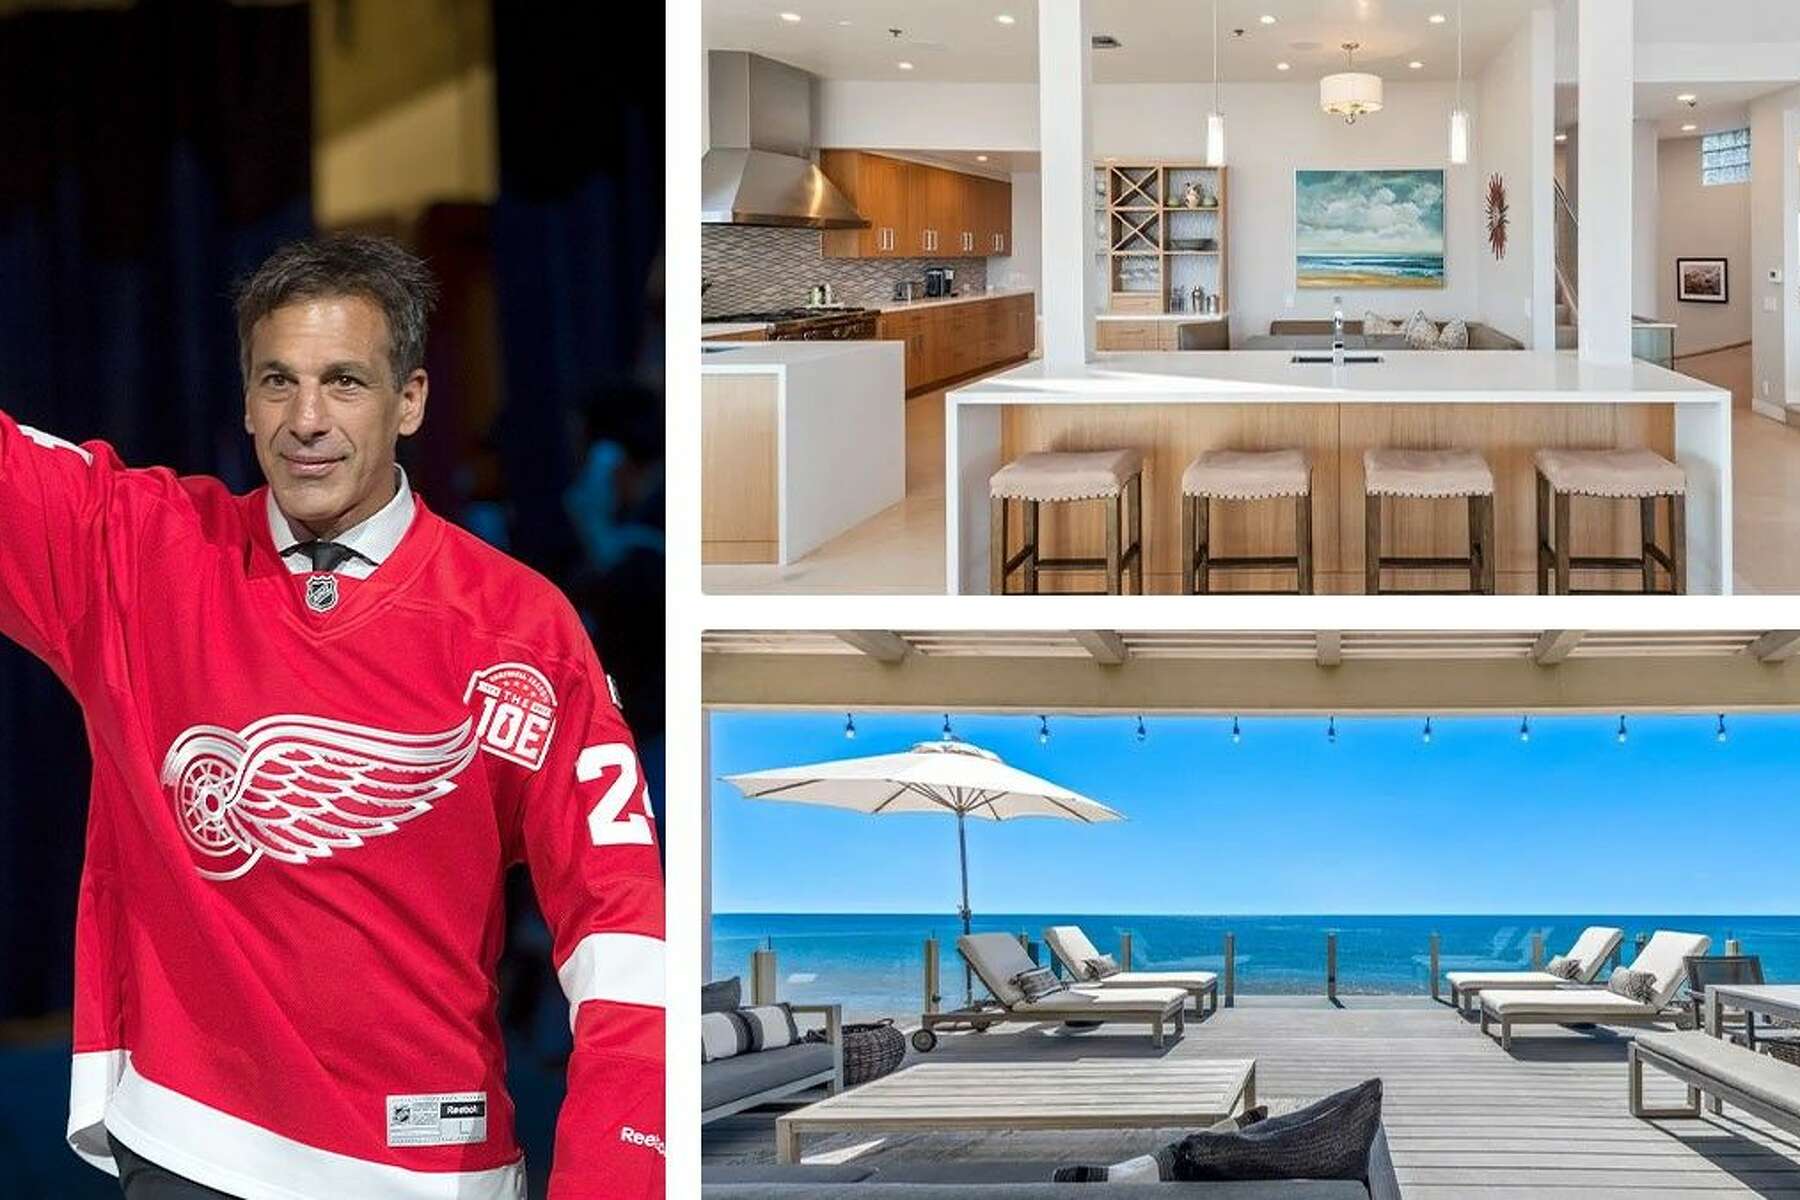 NHL Hockey Legend Looks To Score $75 Million For All Star Malibu Beach House